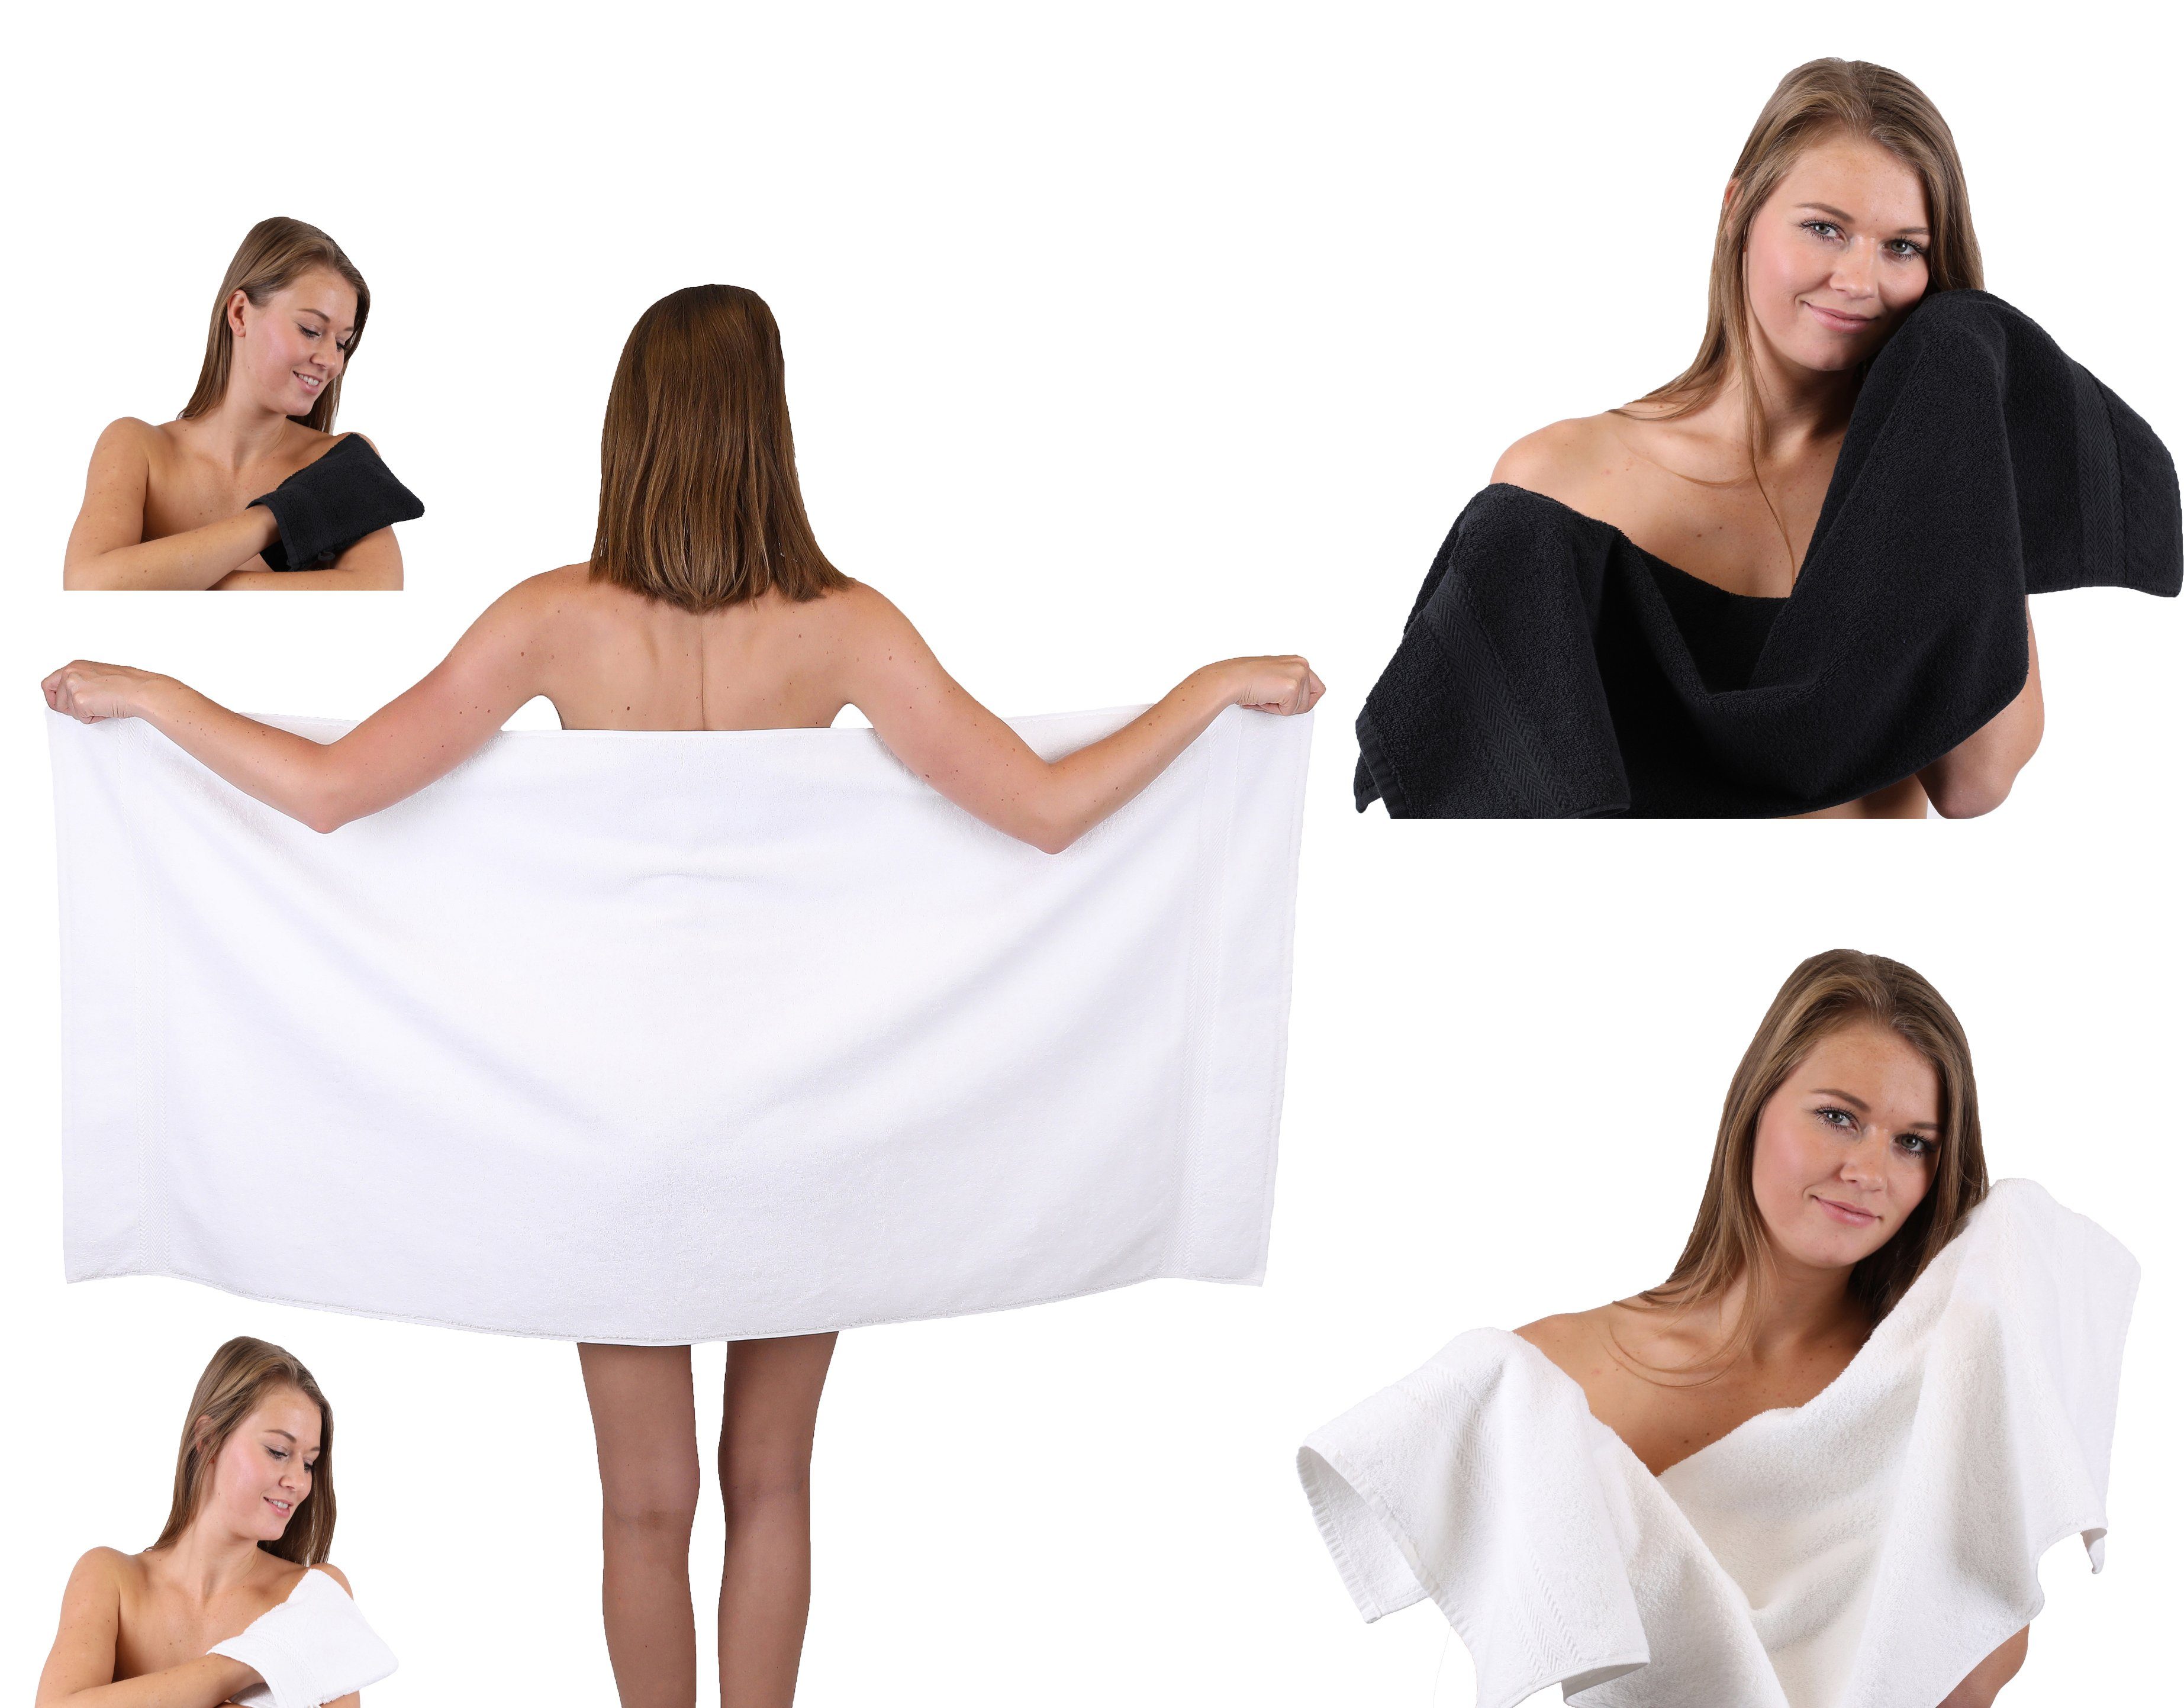 Betz Handtuch Set 5 TLG. Pack Waschhandschuhe, 2 Handtücher 100% Baumwolle Duschtuch 1 Handtuch weiß-schwarz Single 2 Set 100% Baumwolle